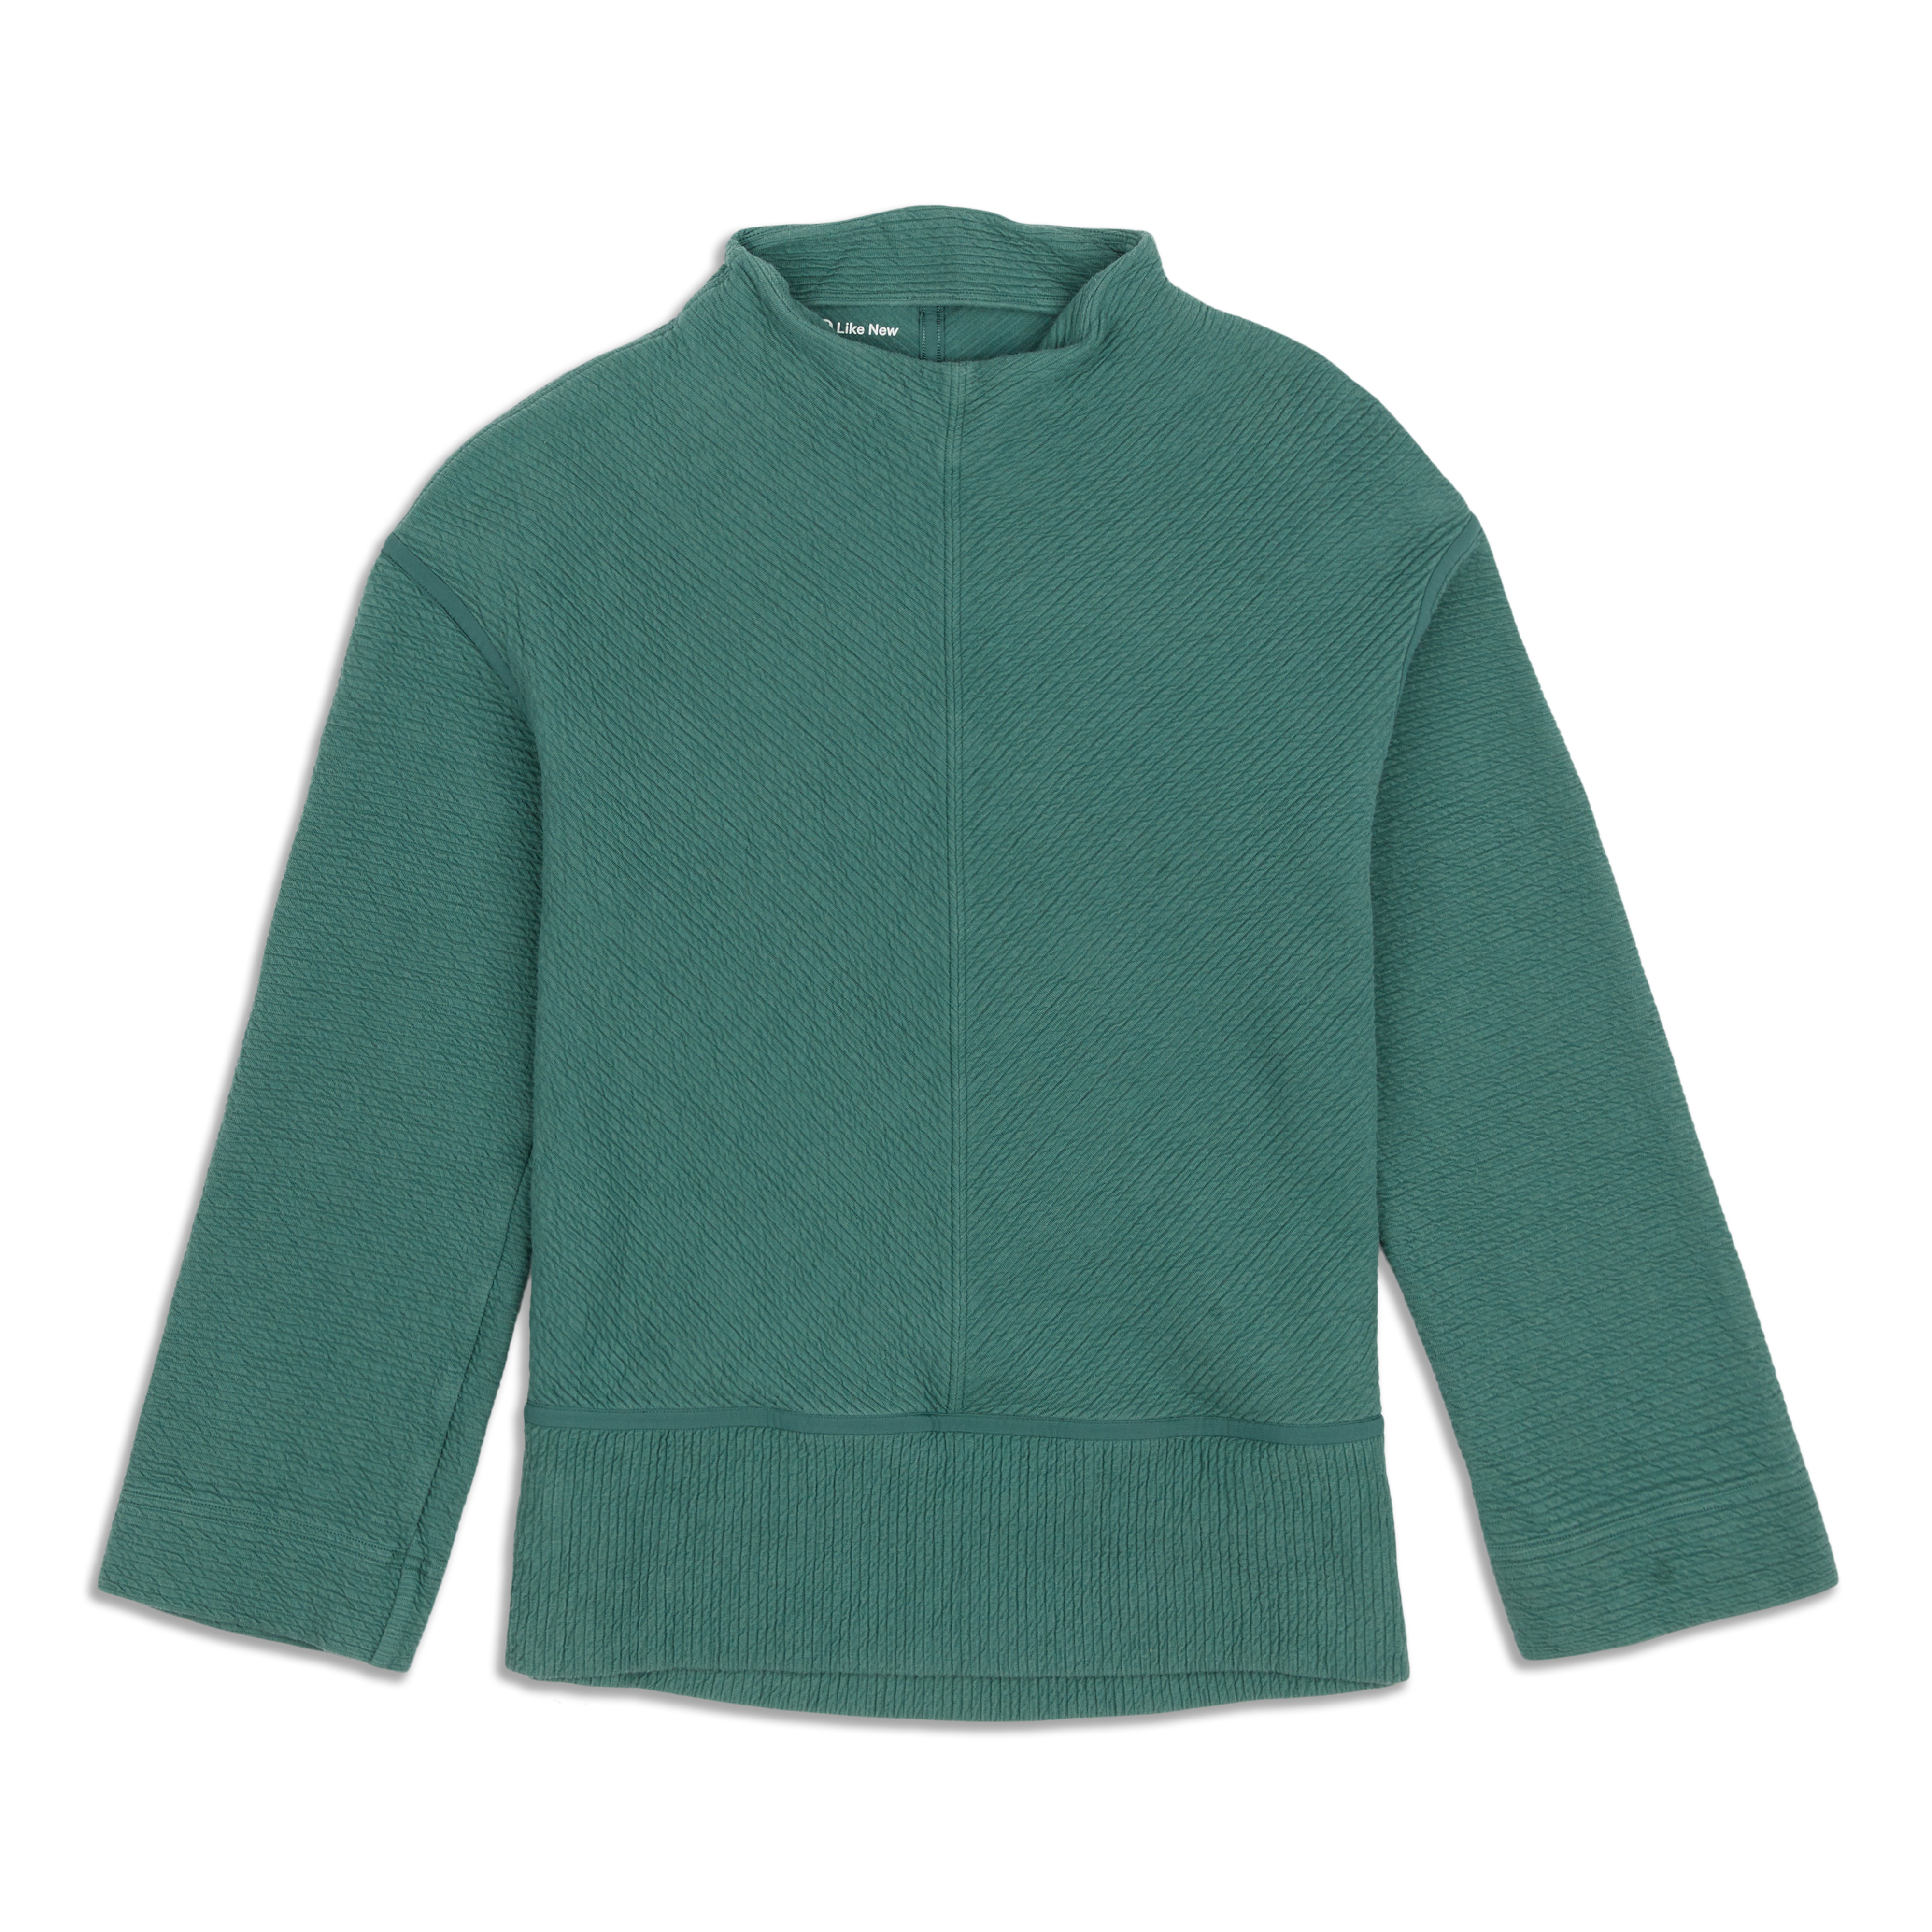 Cotton-Cashmere Blend Mock Neck Sweater - Resale